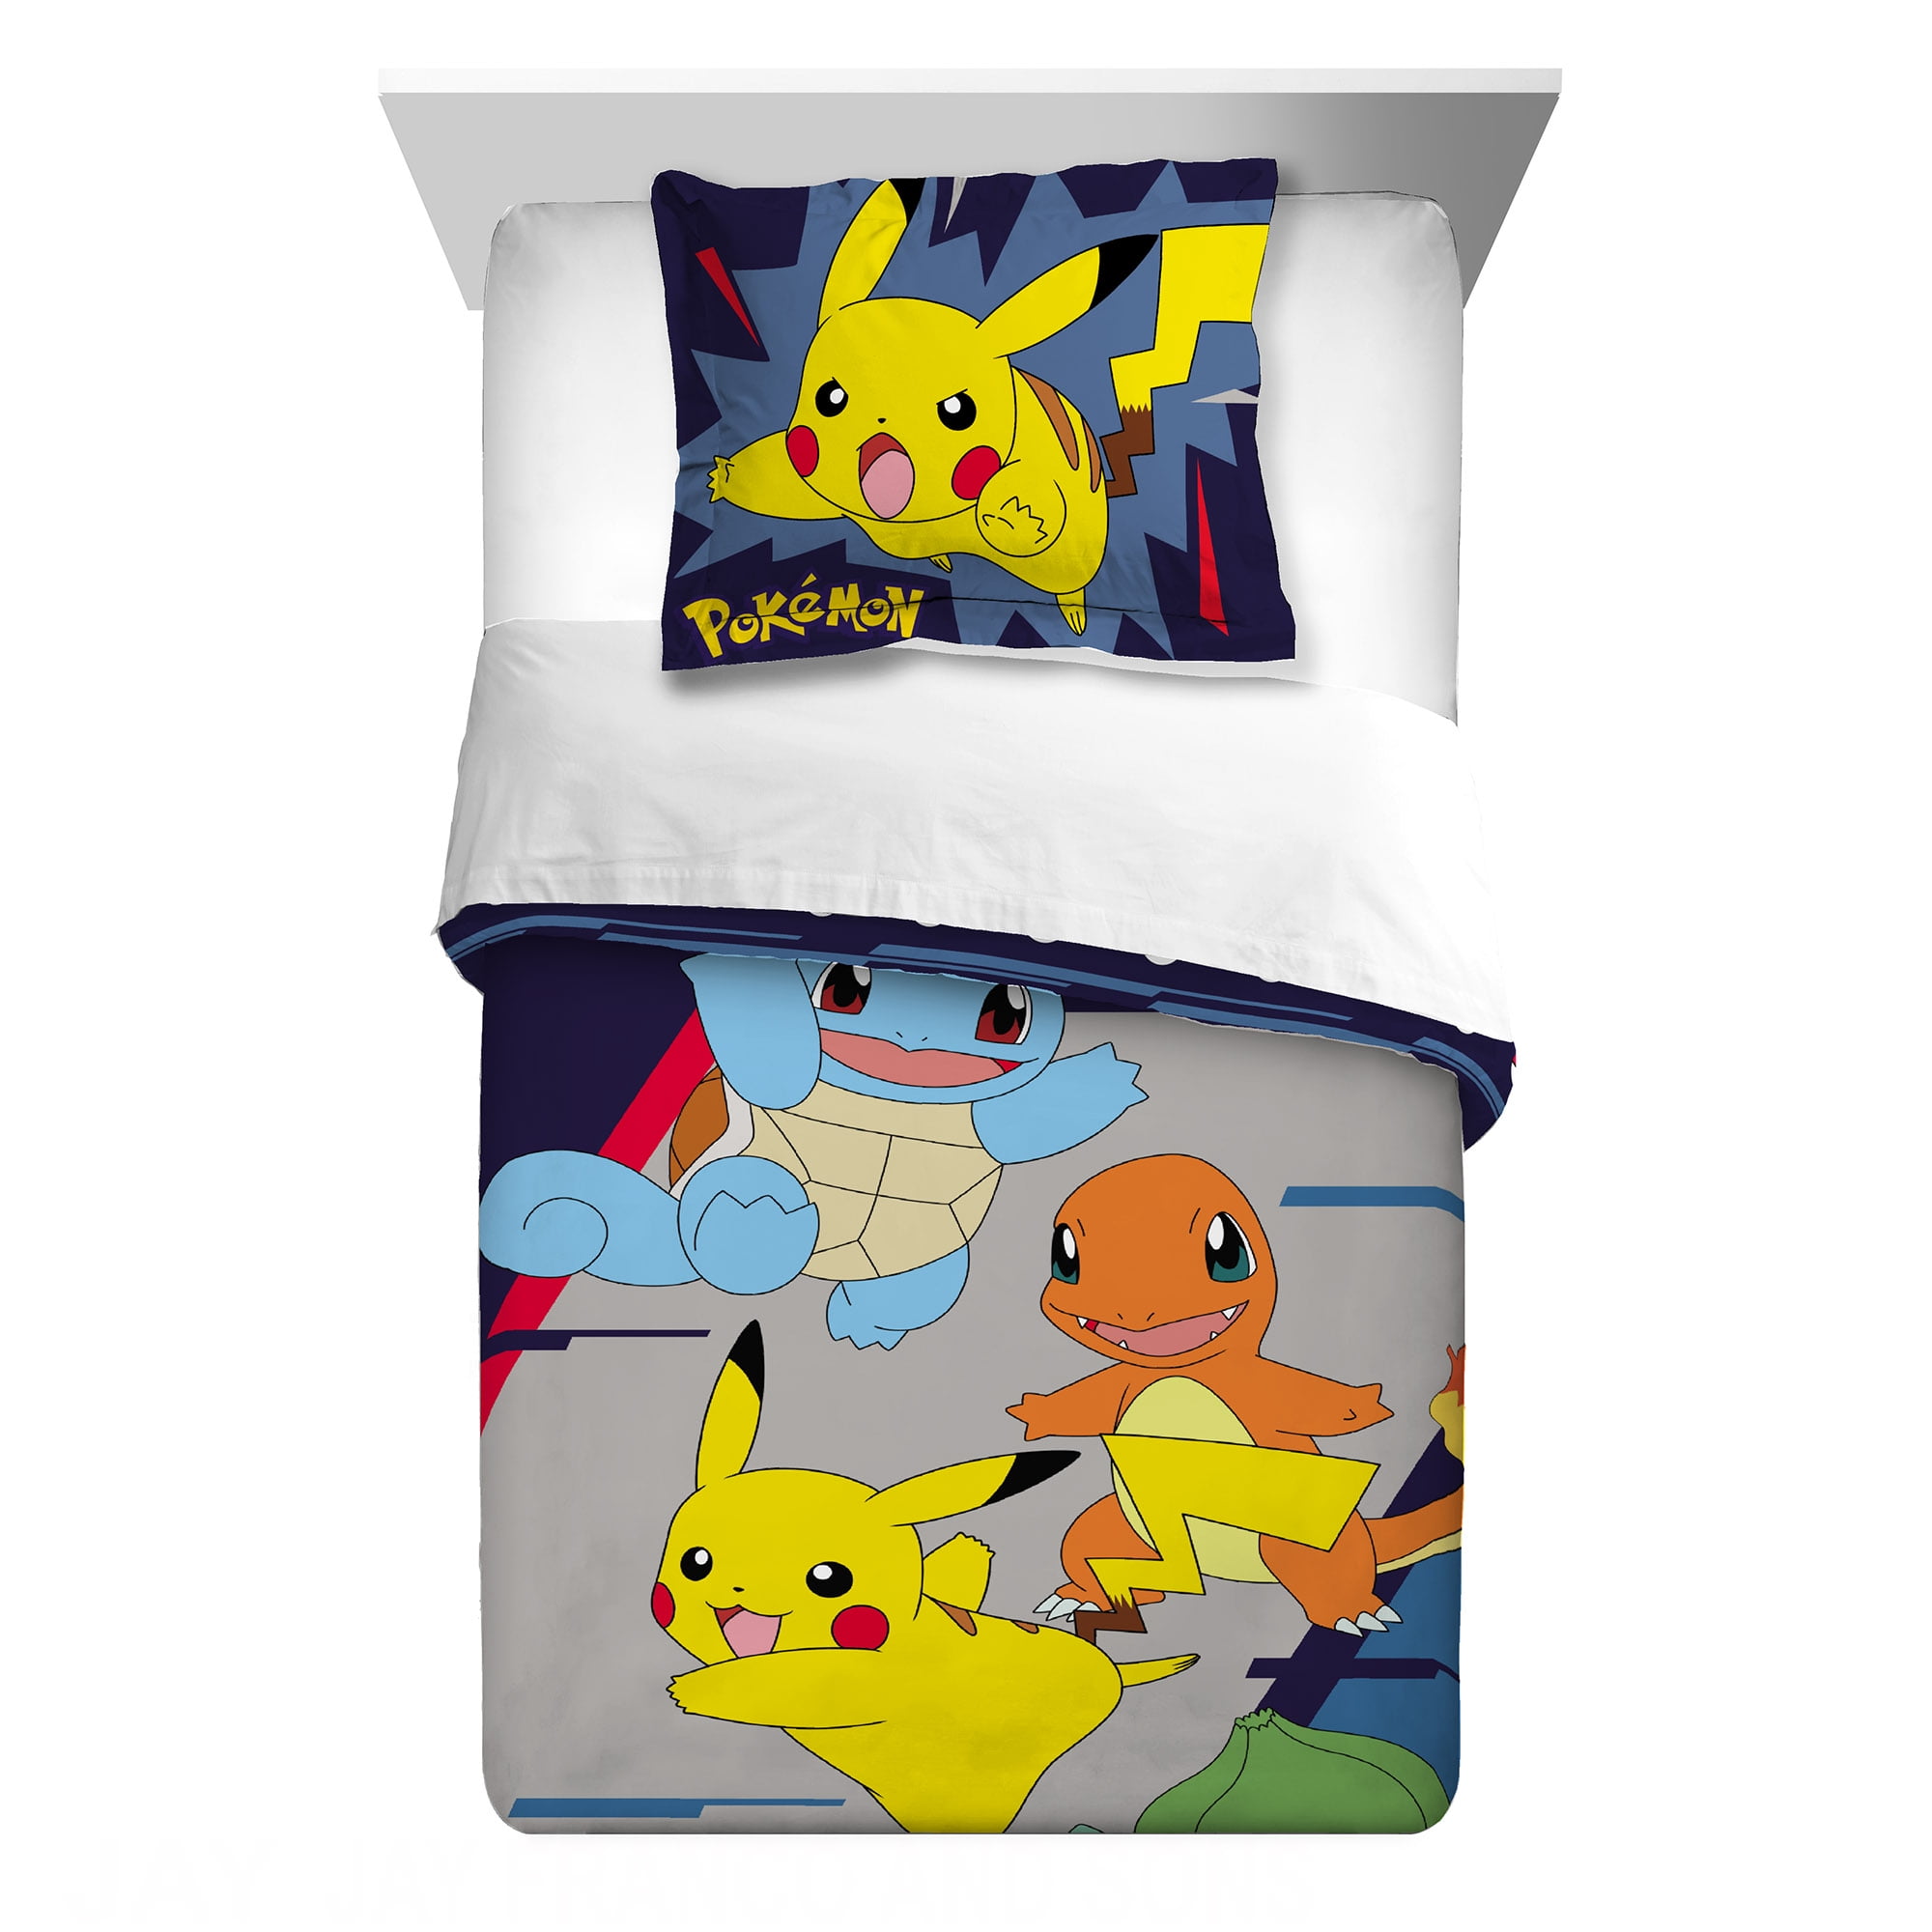 Official Pokemon 'Jump' Double Duvet Cover Set Kids 2-in-1 Design Pikachu Blue 